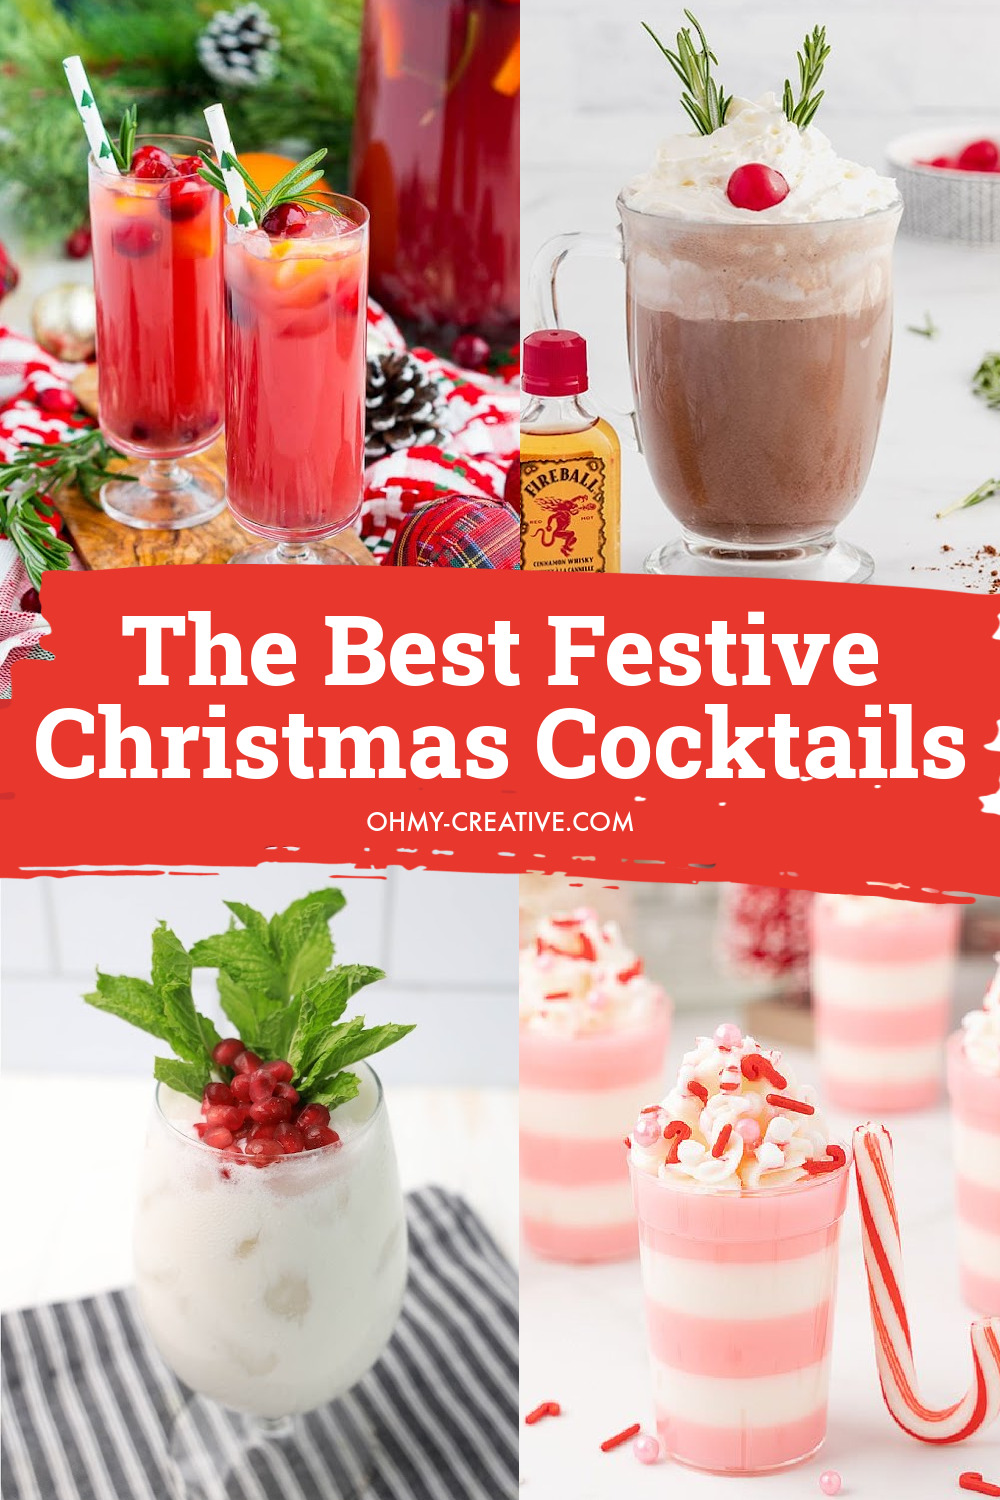 The Best Festive Christmas Cocktails